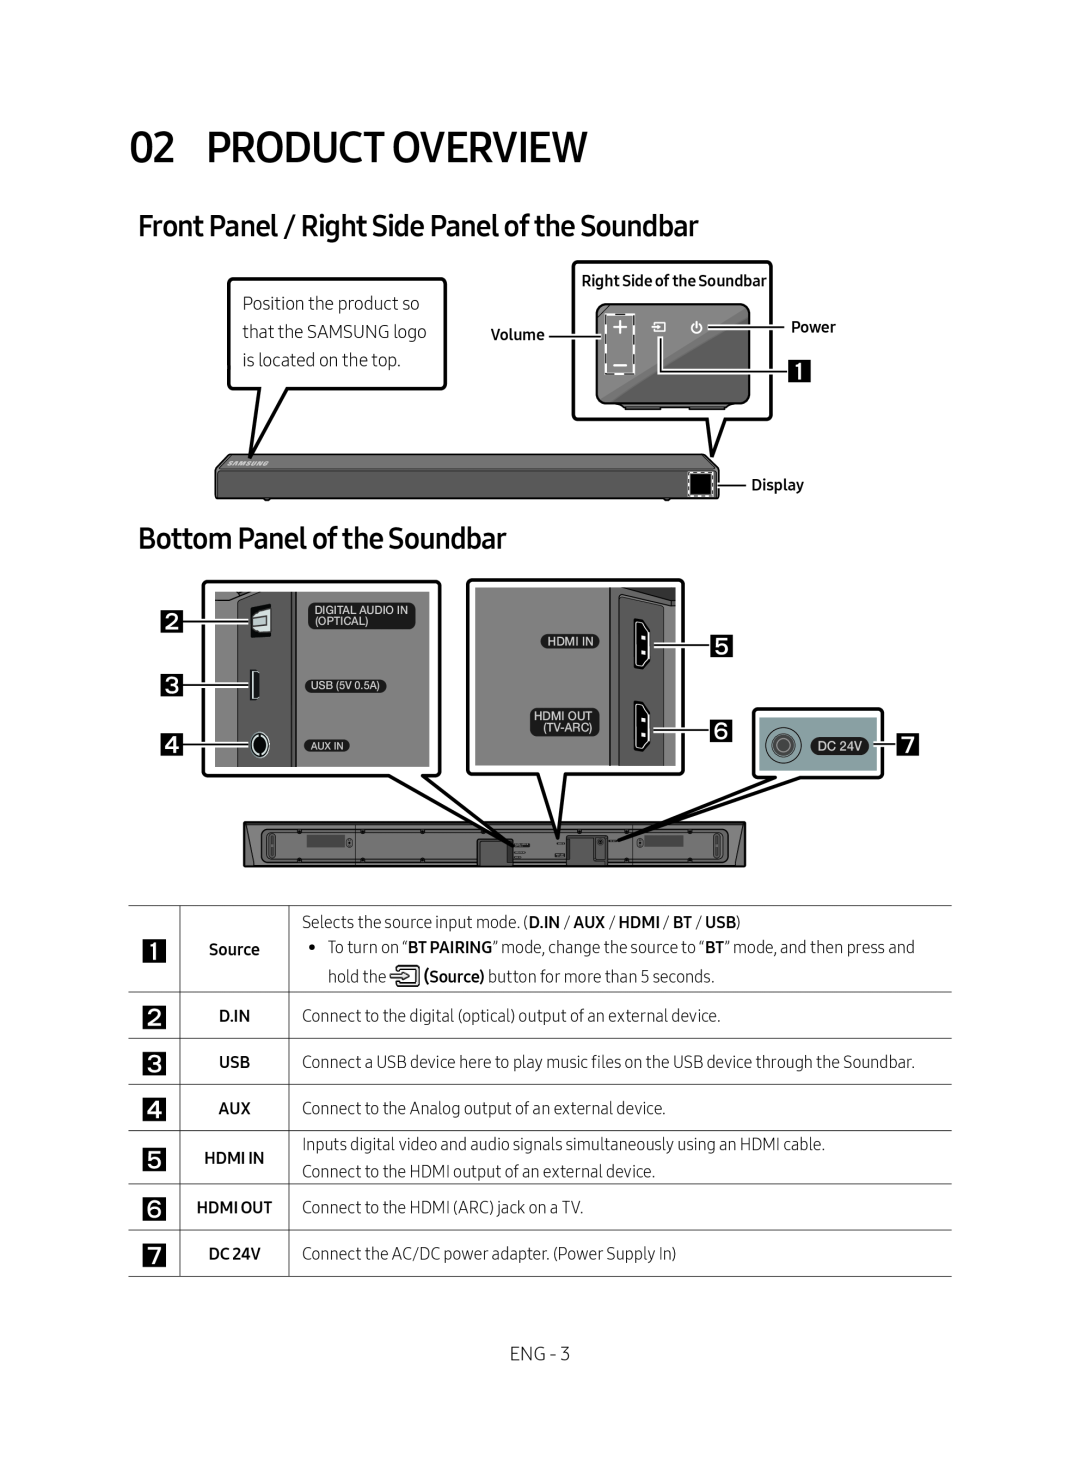 Front Panel / Right Side Panel of the Soundbar Standard HW-R650